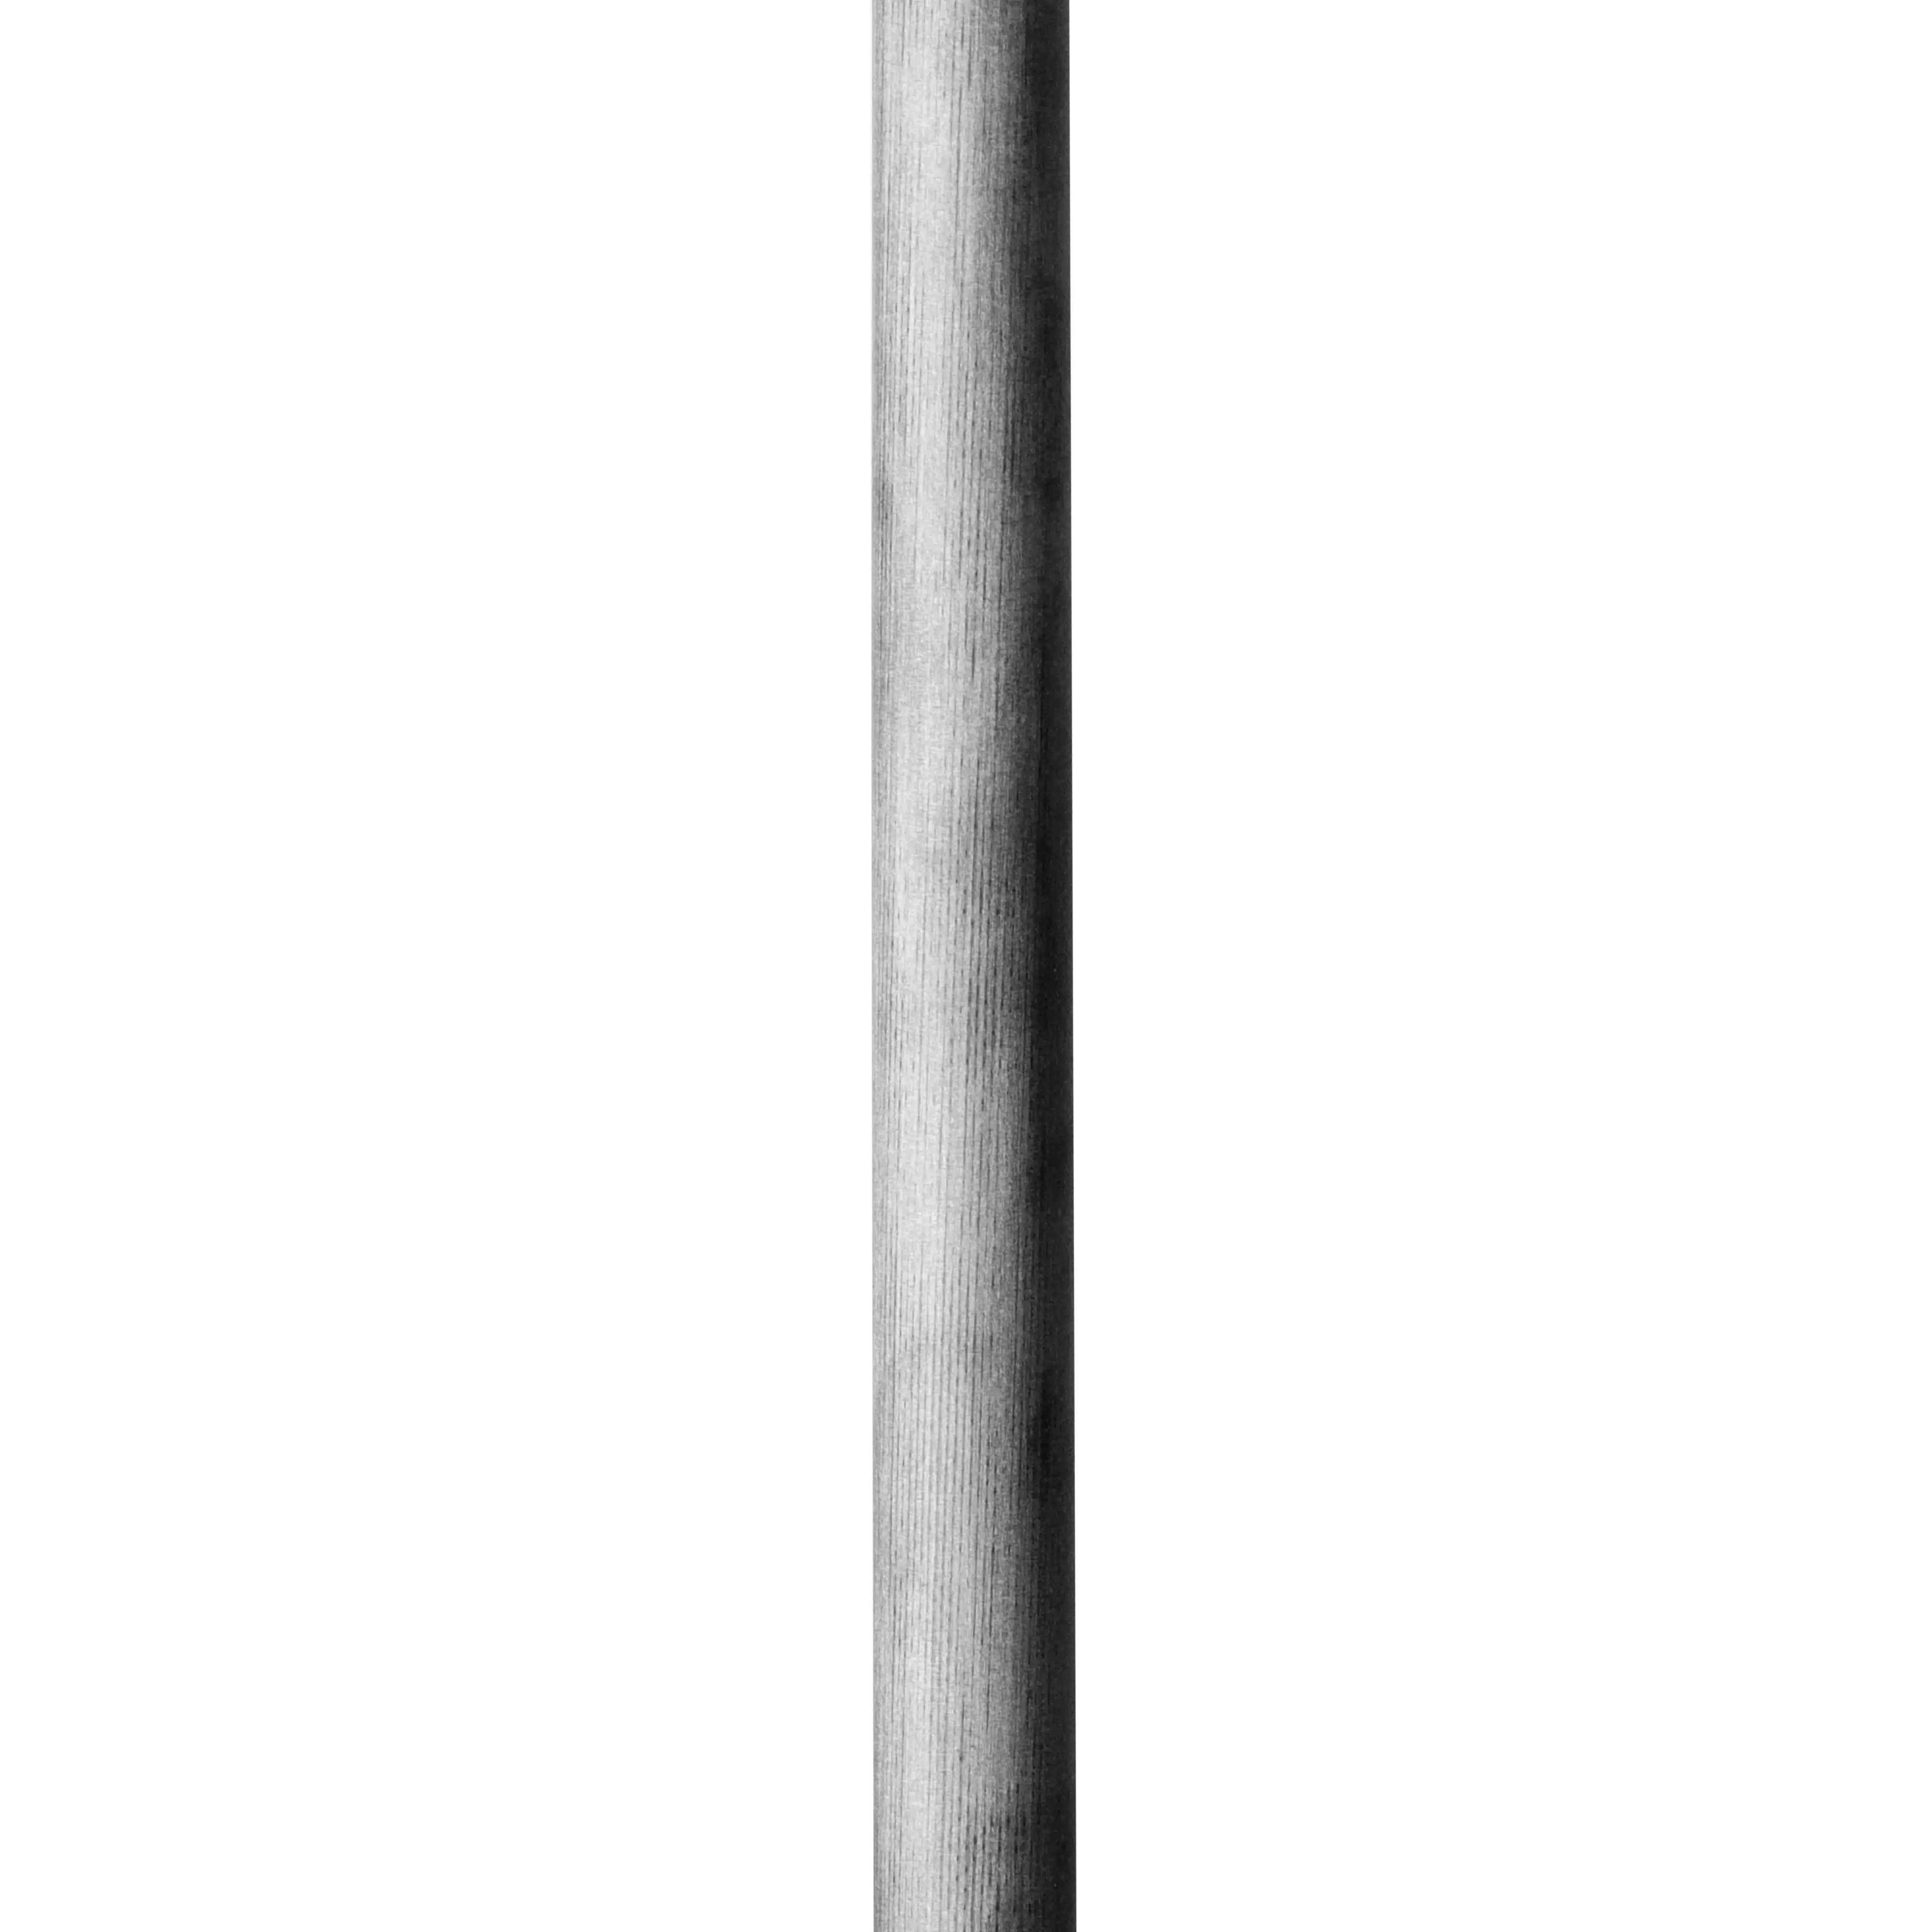 7'6" Medium Inshore & Light Saltwater Rod Blank USA76M